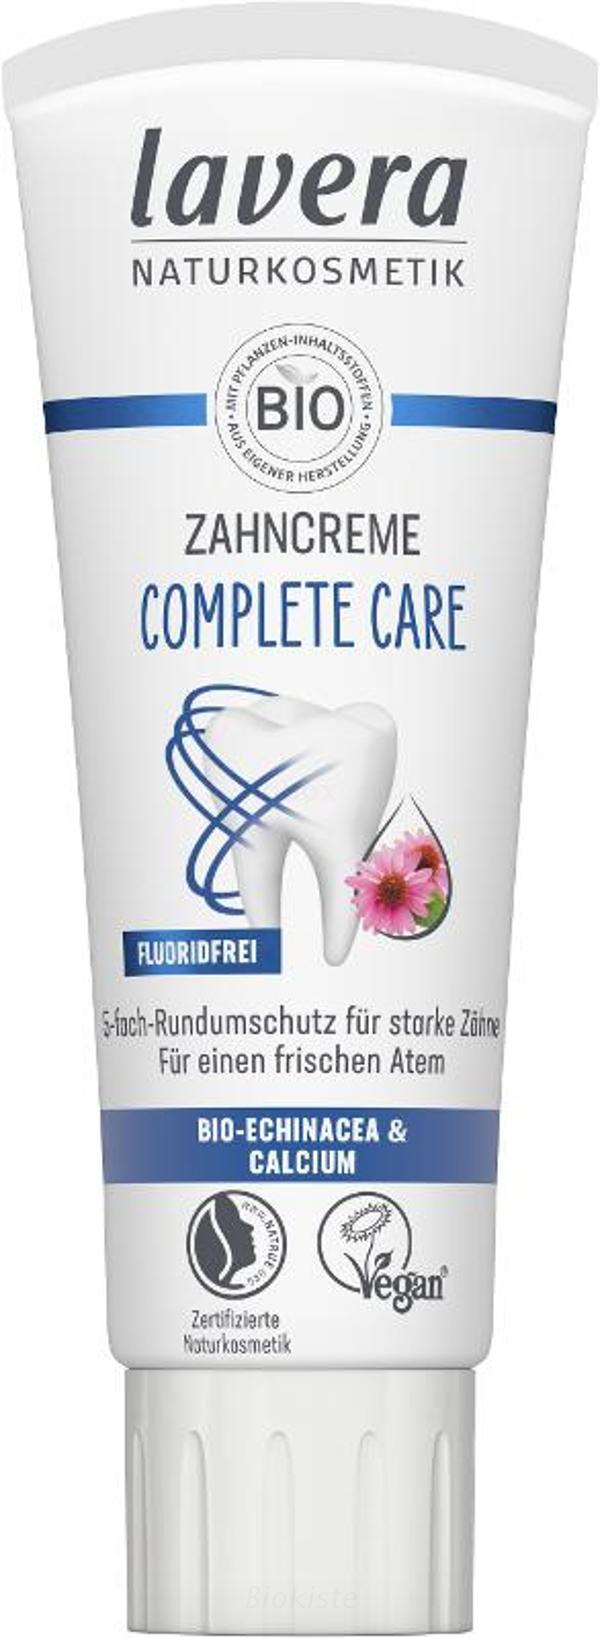 Produktfoto zu Zahncreme Complete Care ohne